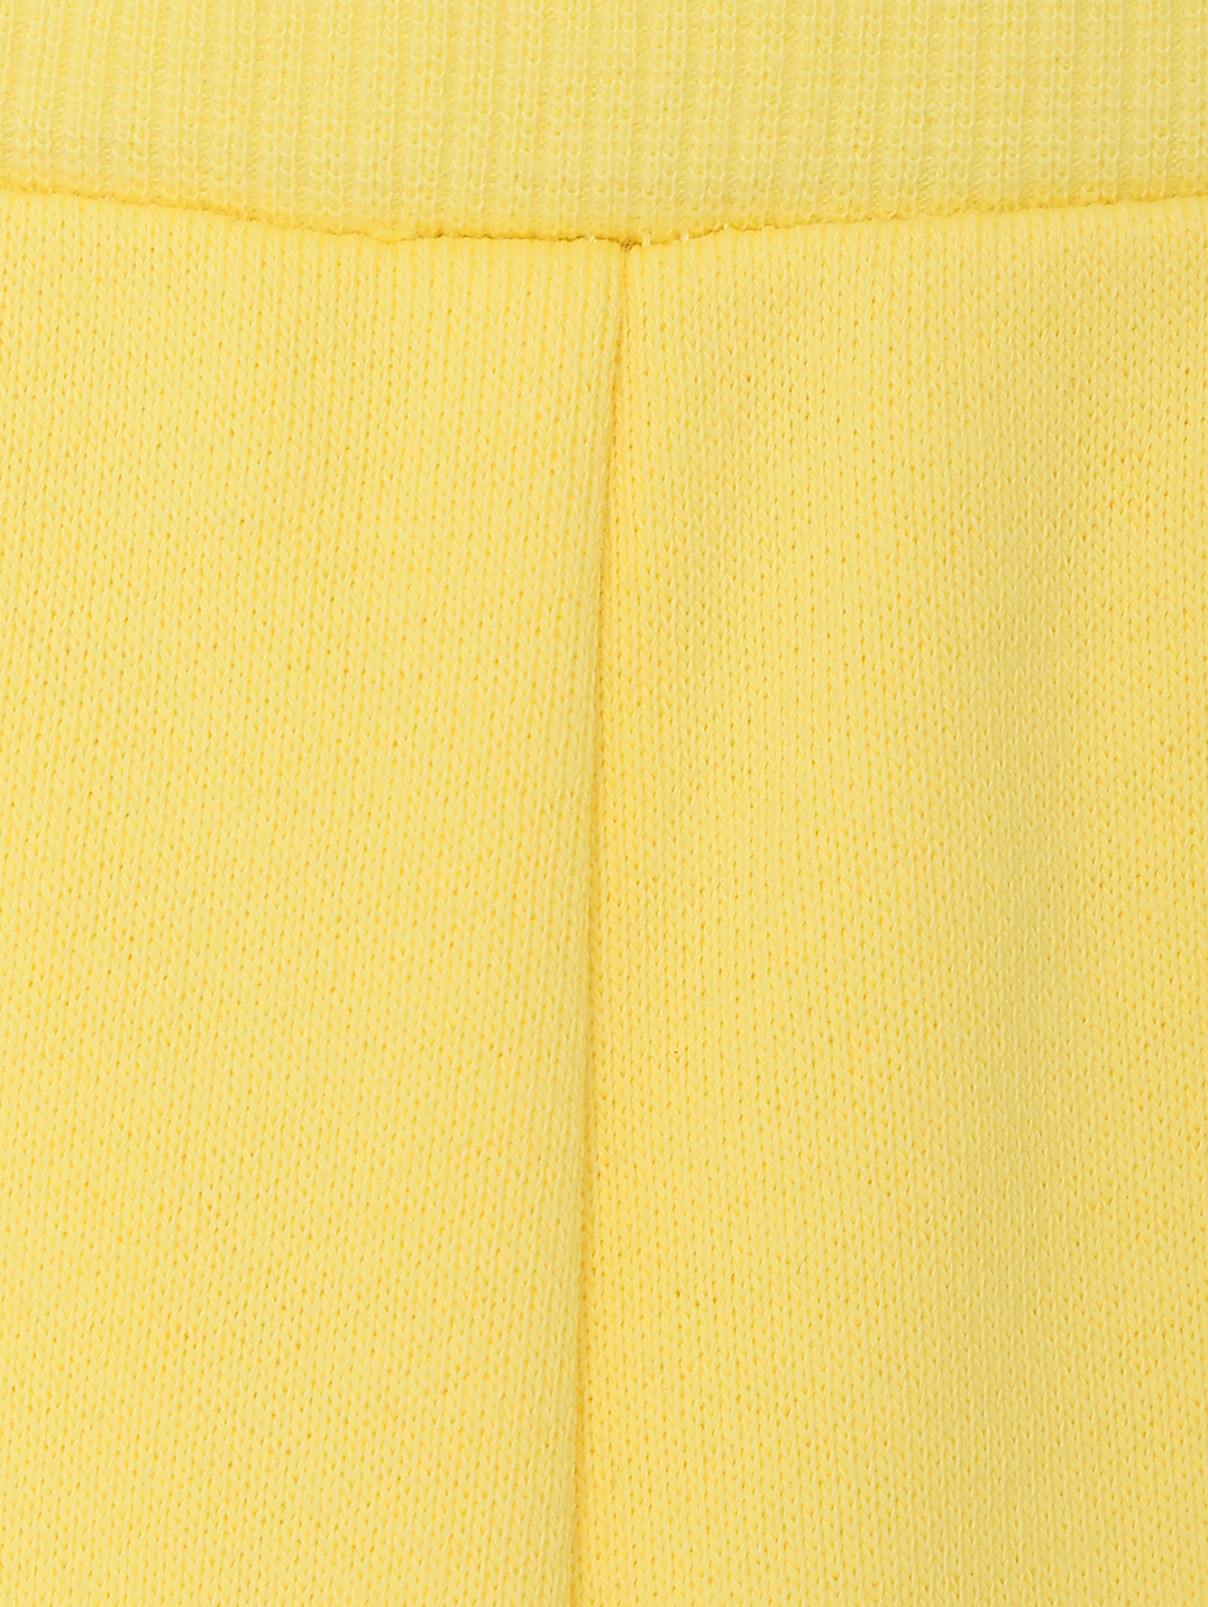 Брюки из хлопка на резинке Weekend Max Mara  –  Деталь  – Цвет:  Желтый